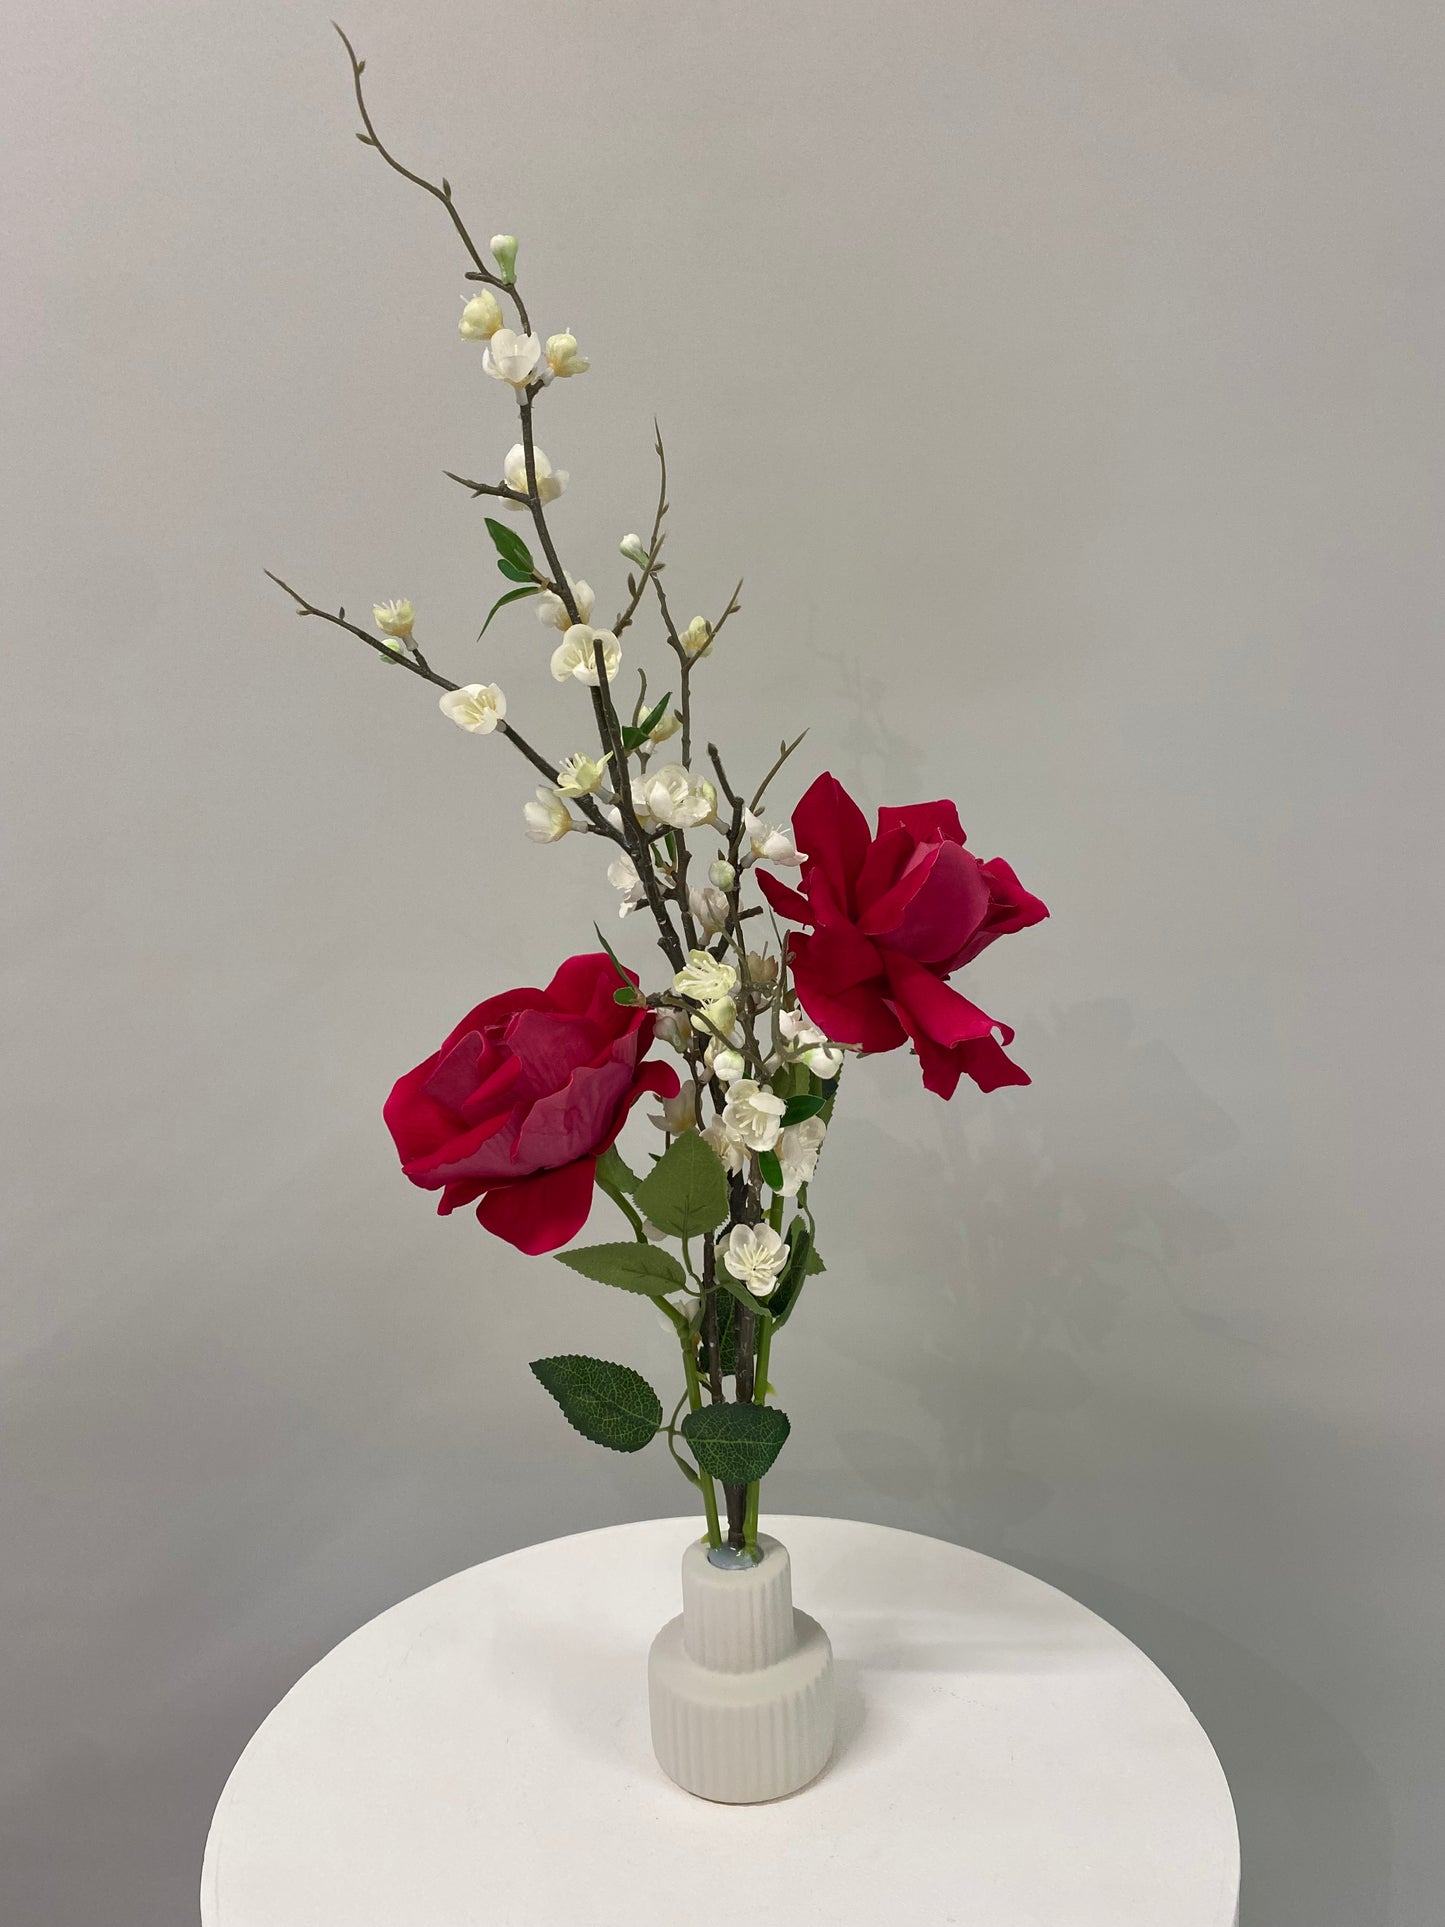 Red Rose peach blossom wedding table bud vase